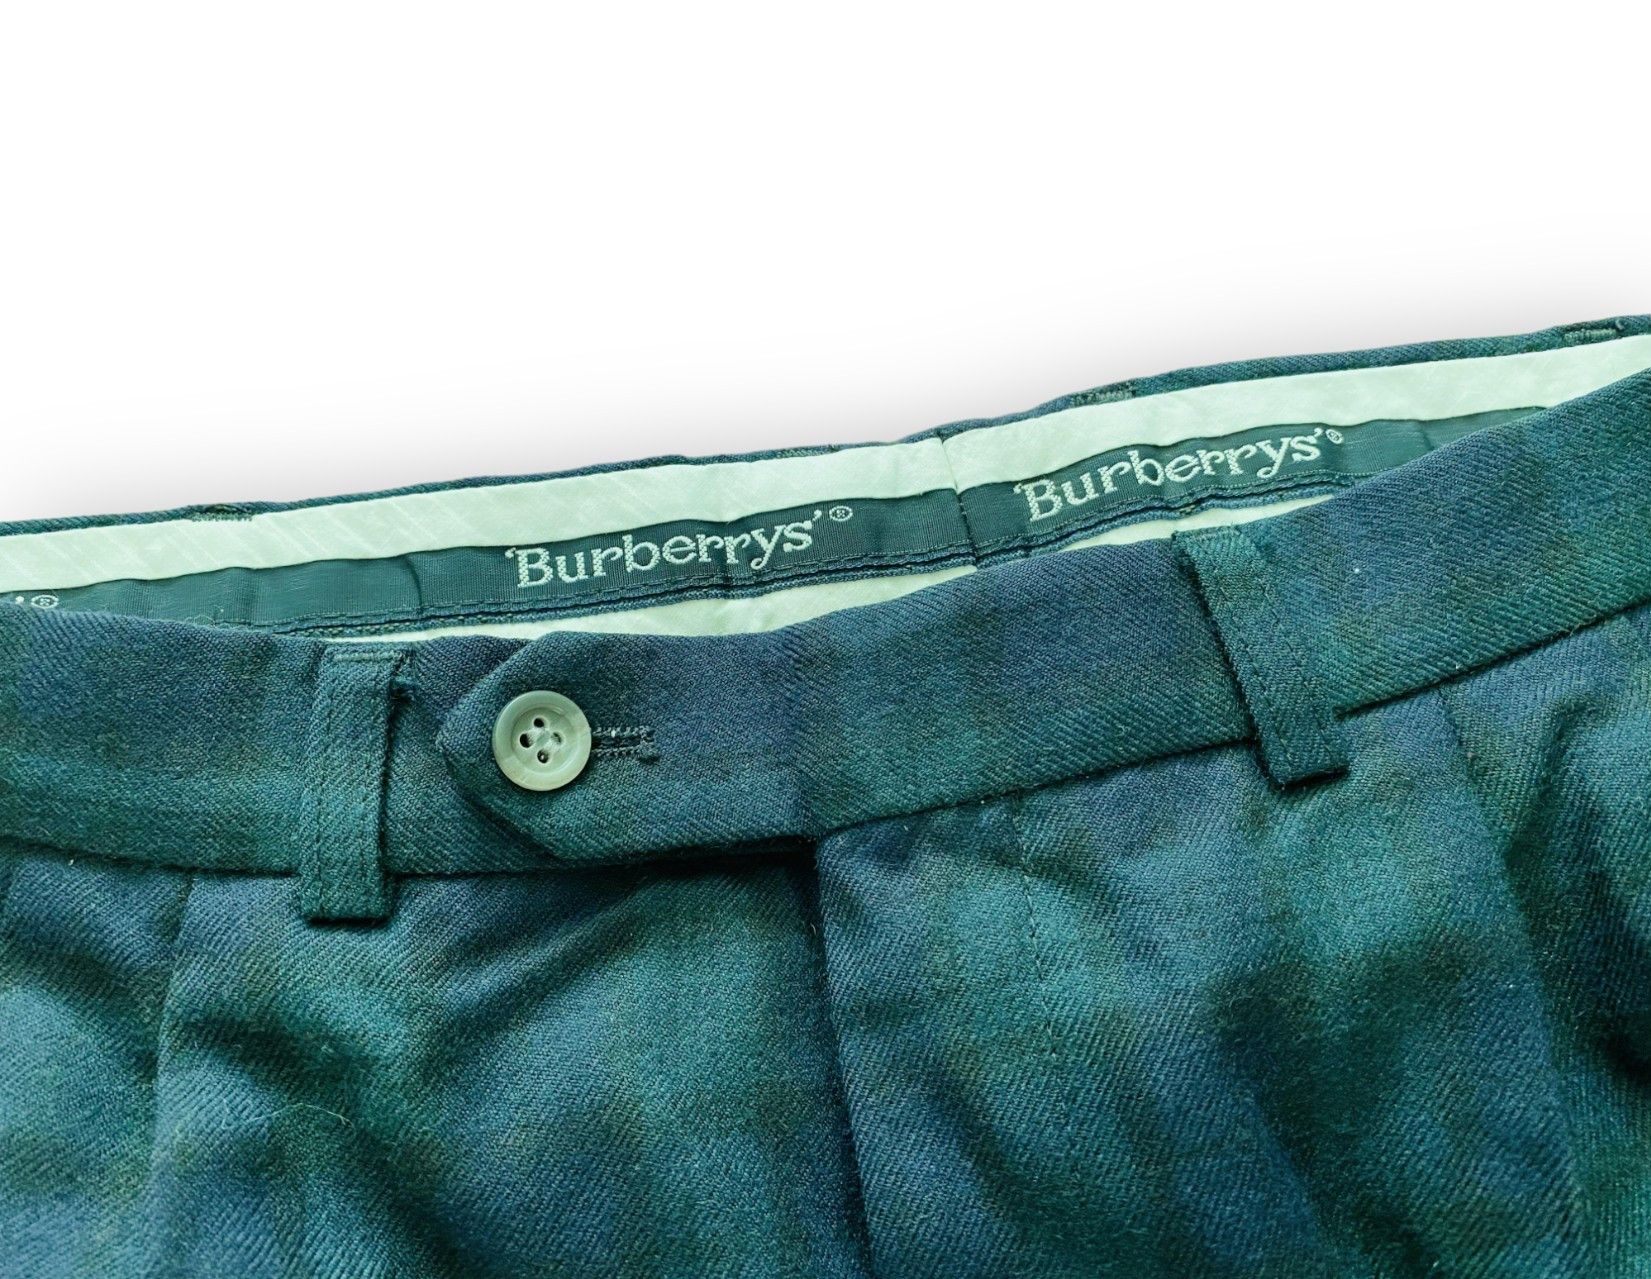 Burberry Pants Tartan Black Watch Check Vintage Green Retro - 9